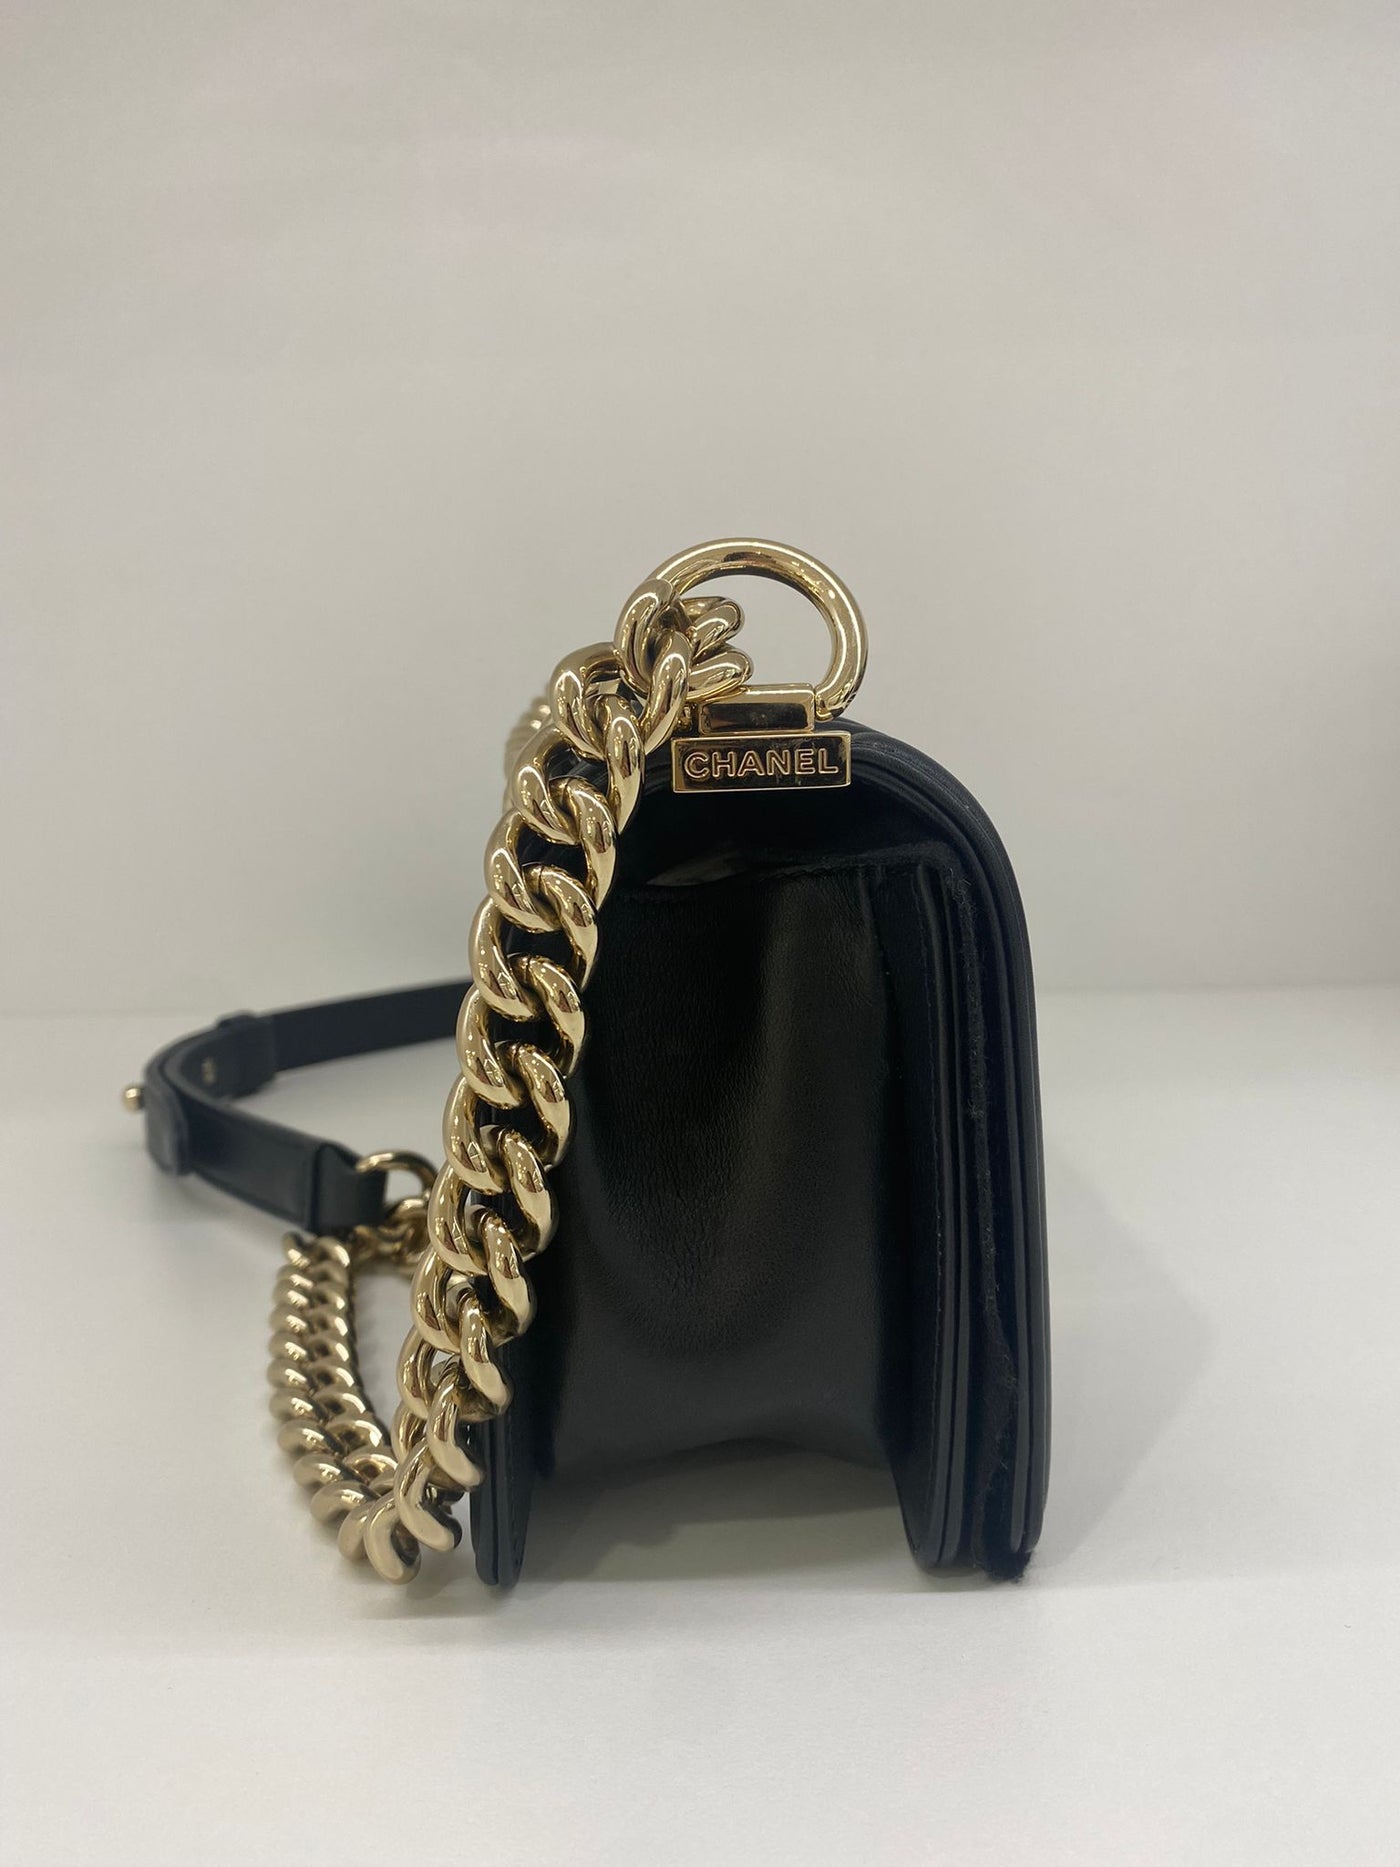 Chanel Boy Bag Black Python Size Small - SOLD